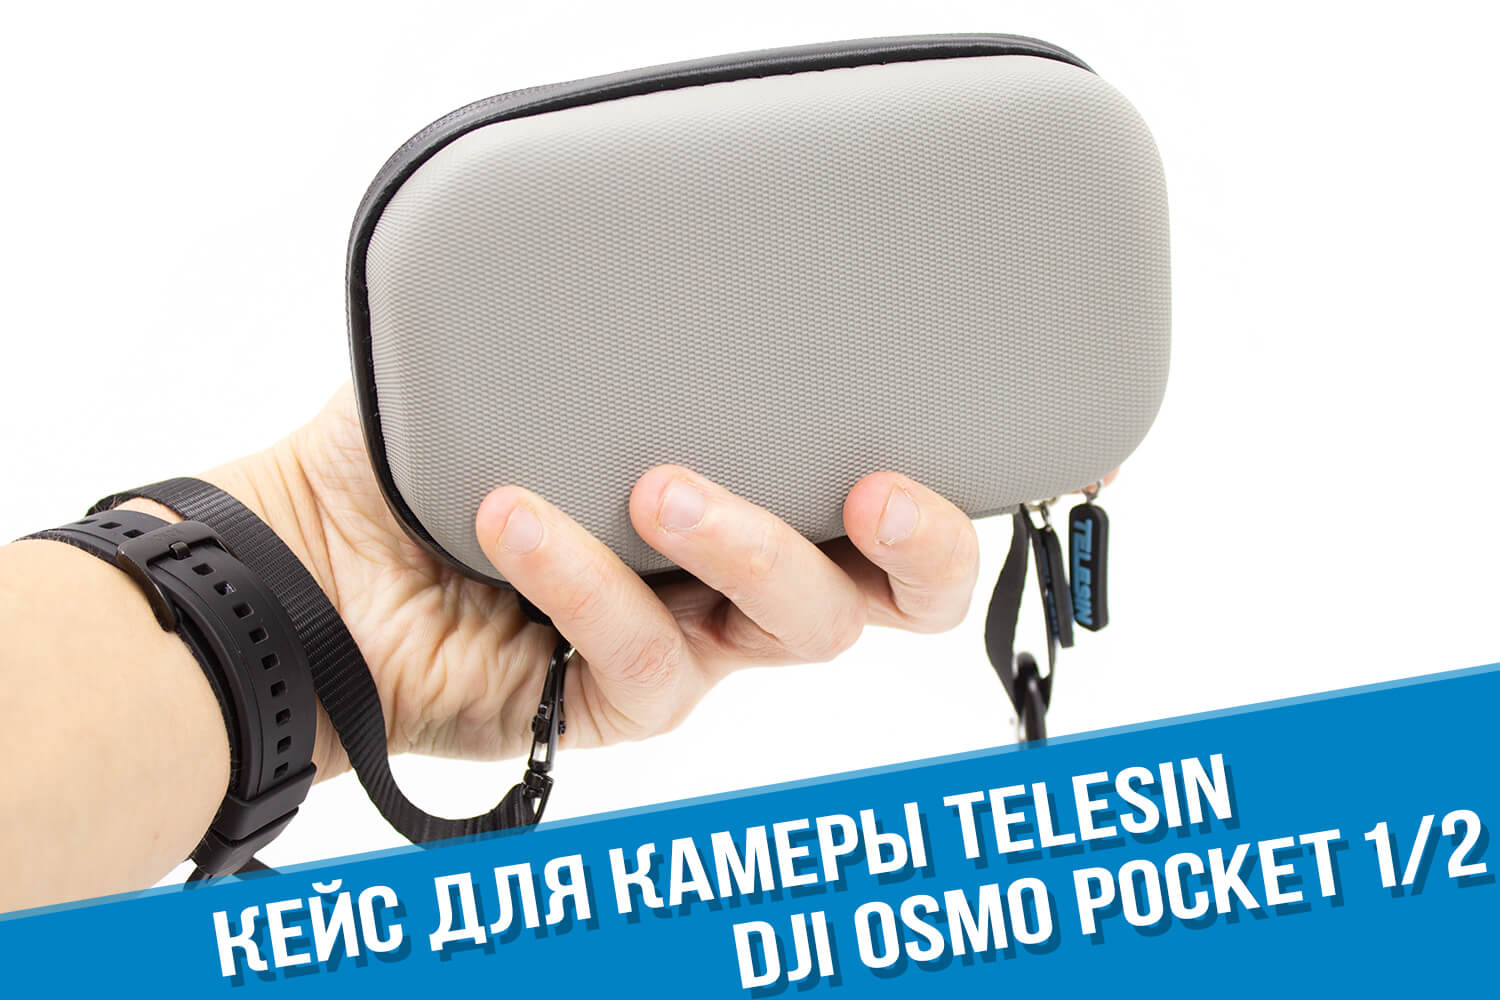 Кейс для камеры DJI Osmo Pocket фирмы Telesin